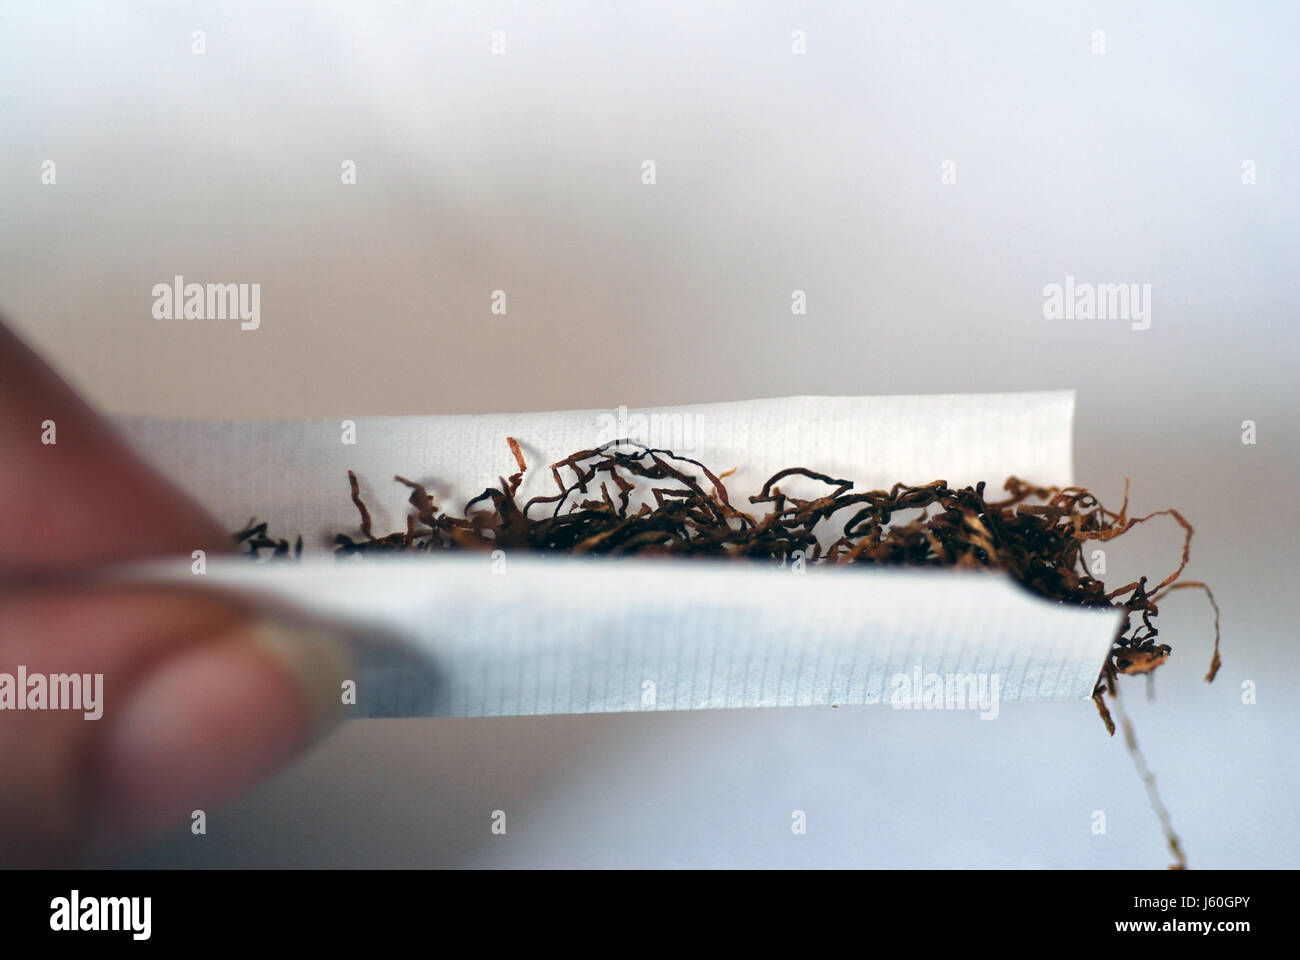 Fumeur odeur fumée fumer la drogue drogues toxicomanogènes matériel anesthésique Banque D'Images